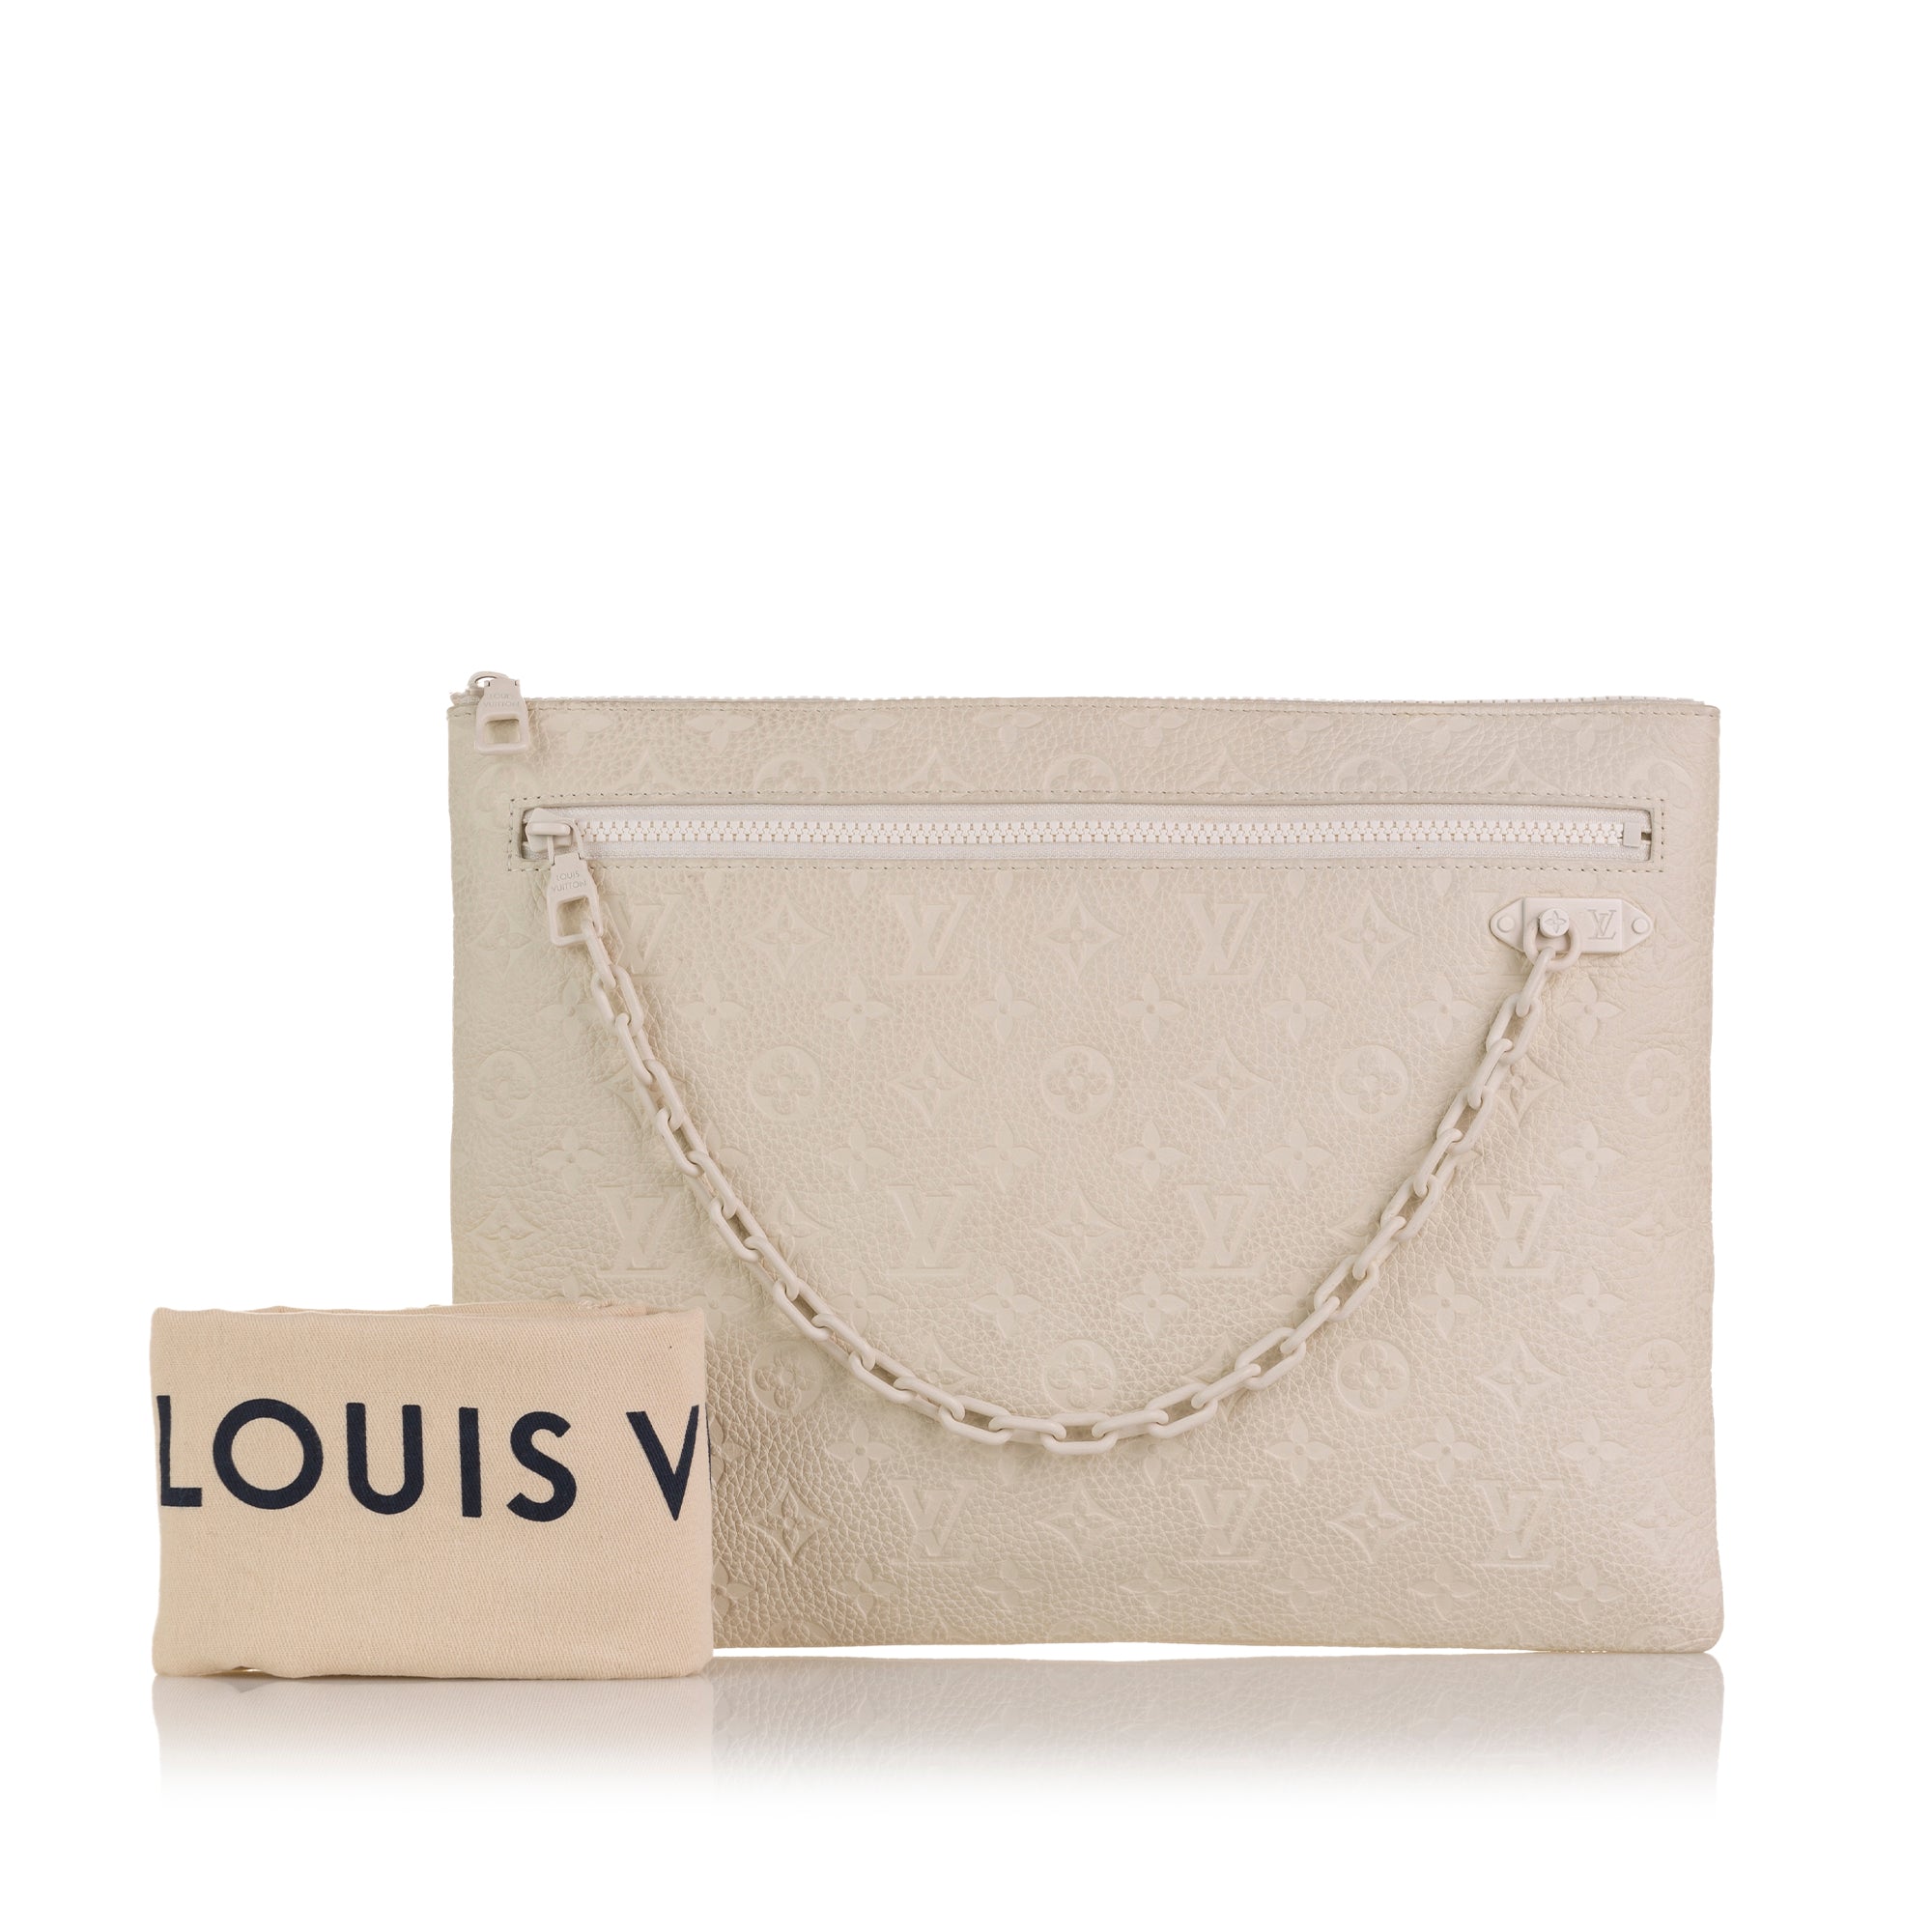  Louis Vuitton Women's Pre-Loved White Taurillon Soft